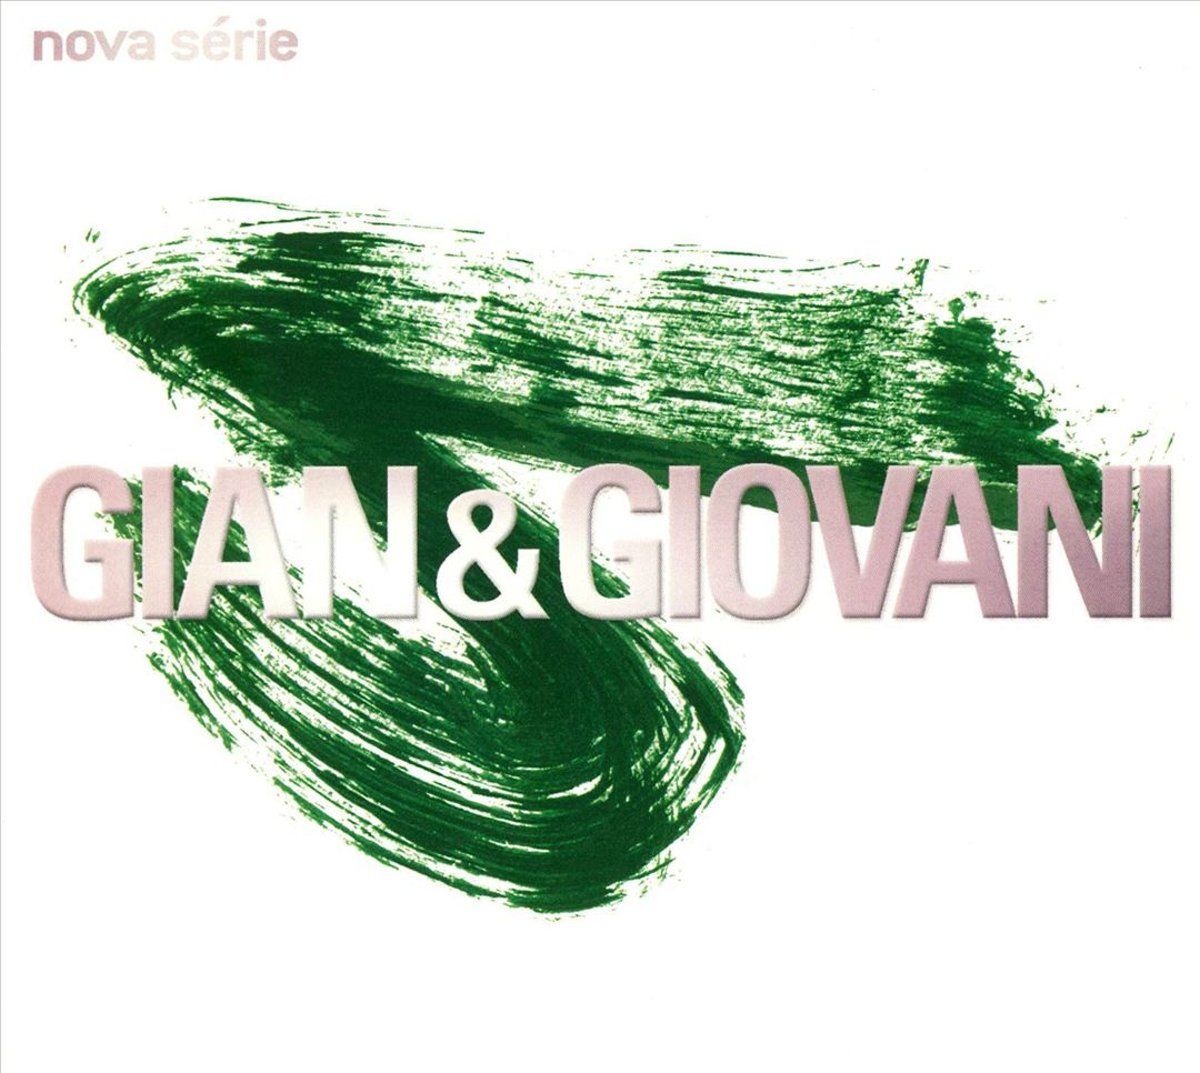 Agora Chega - (letra da música) - Gian e Giovani - Cifra Club